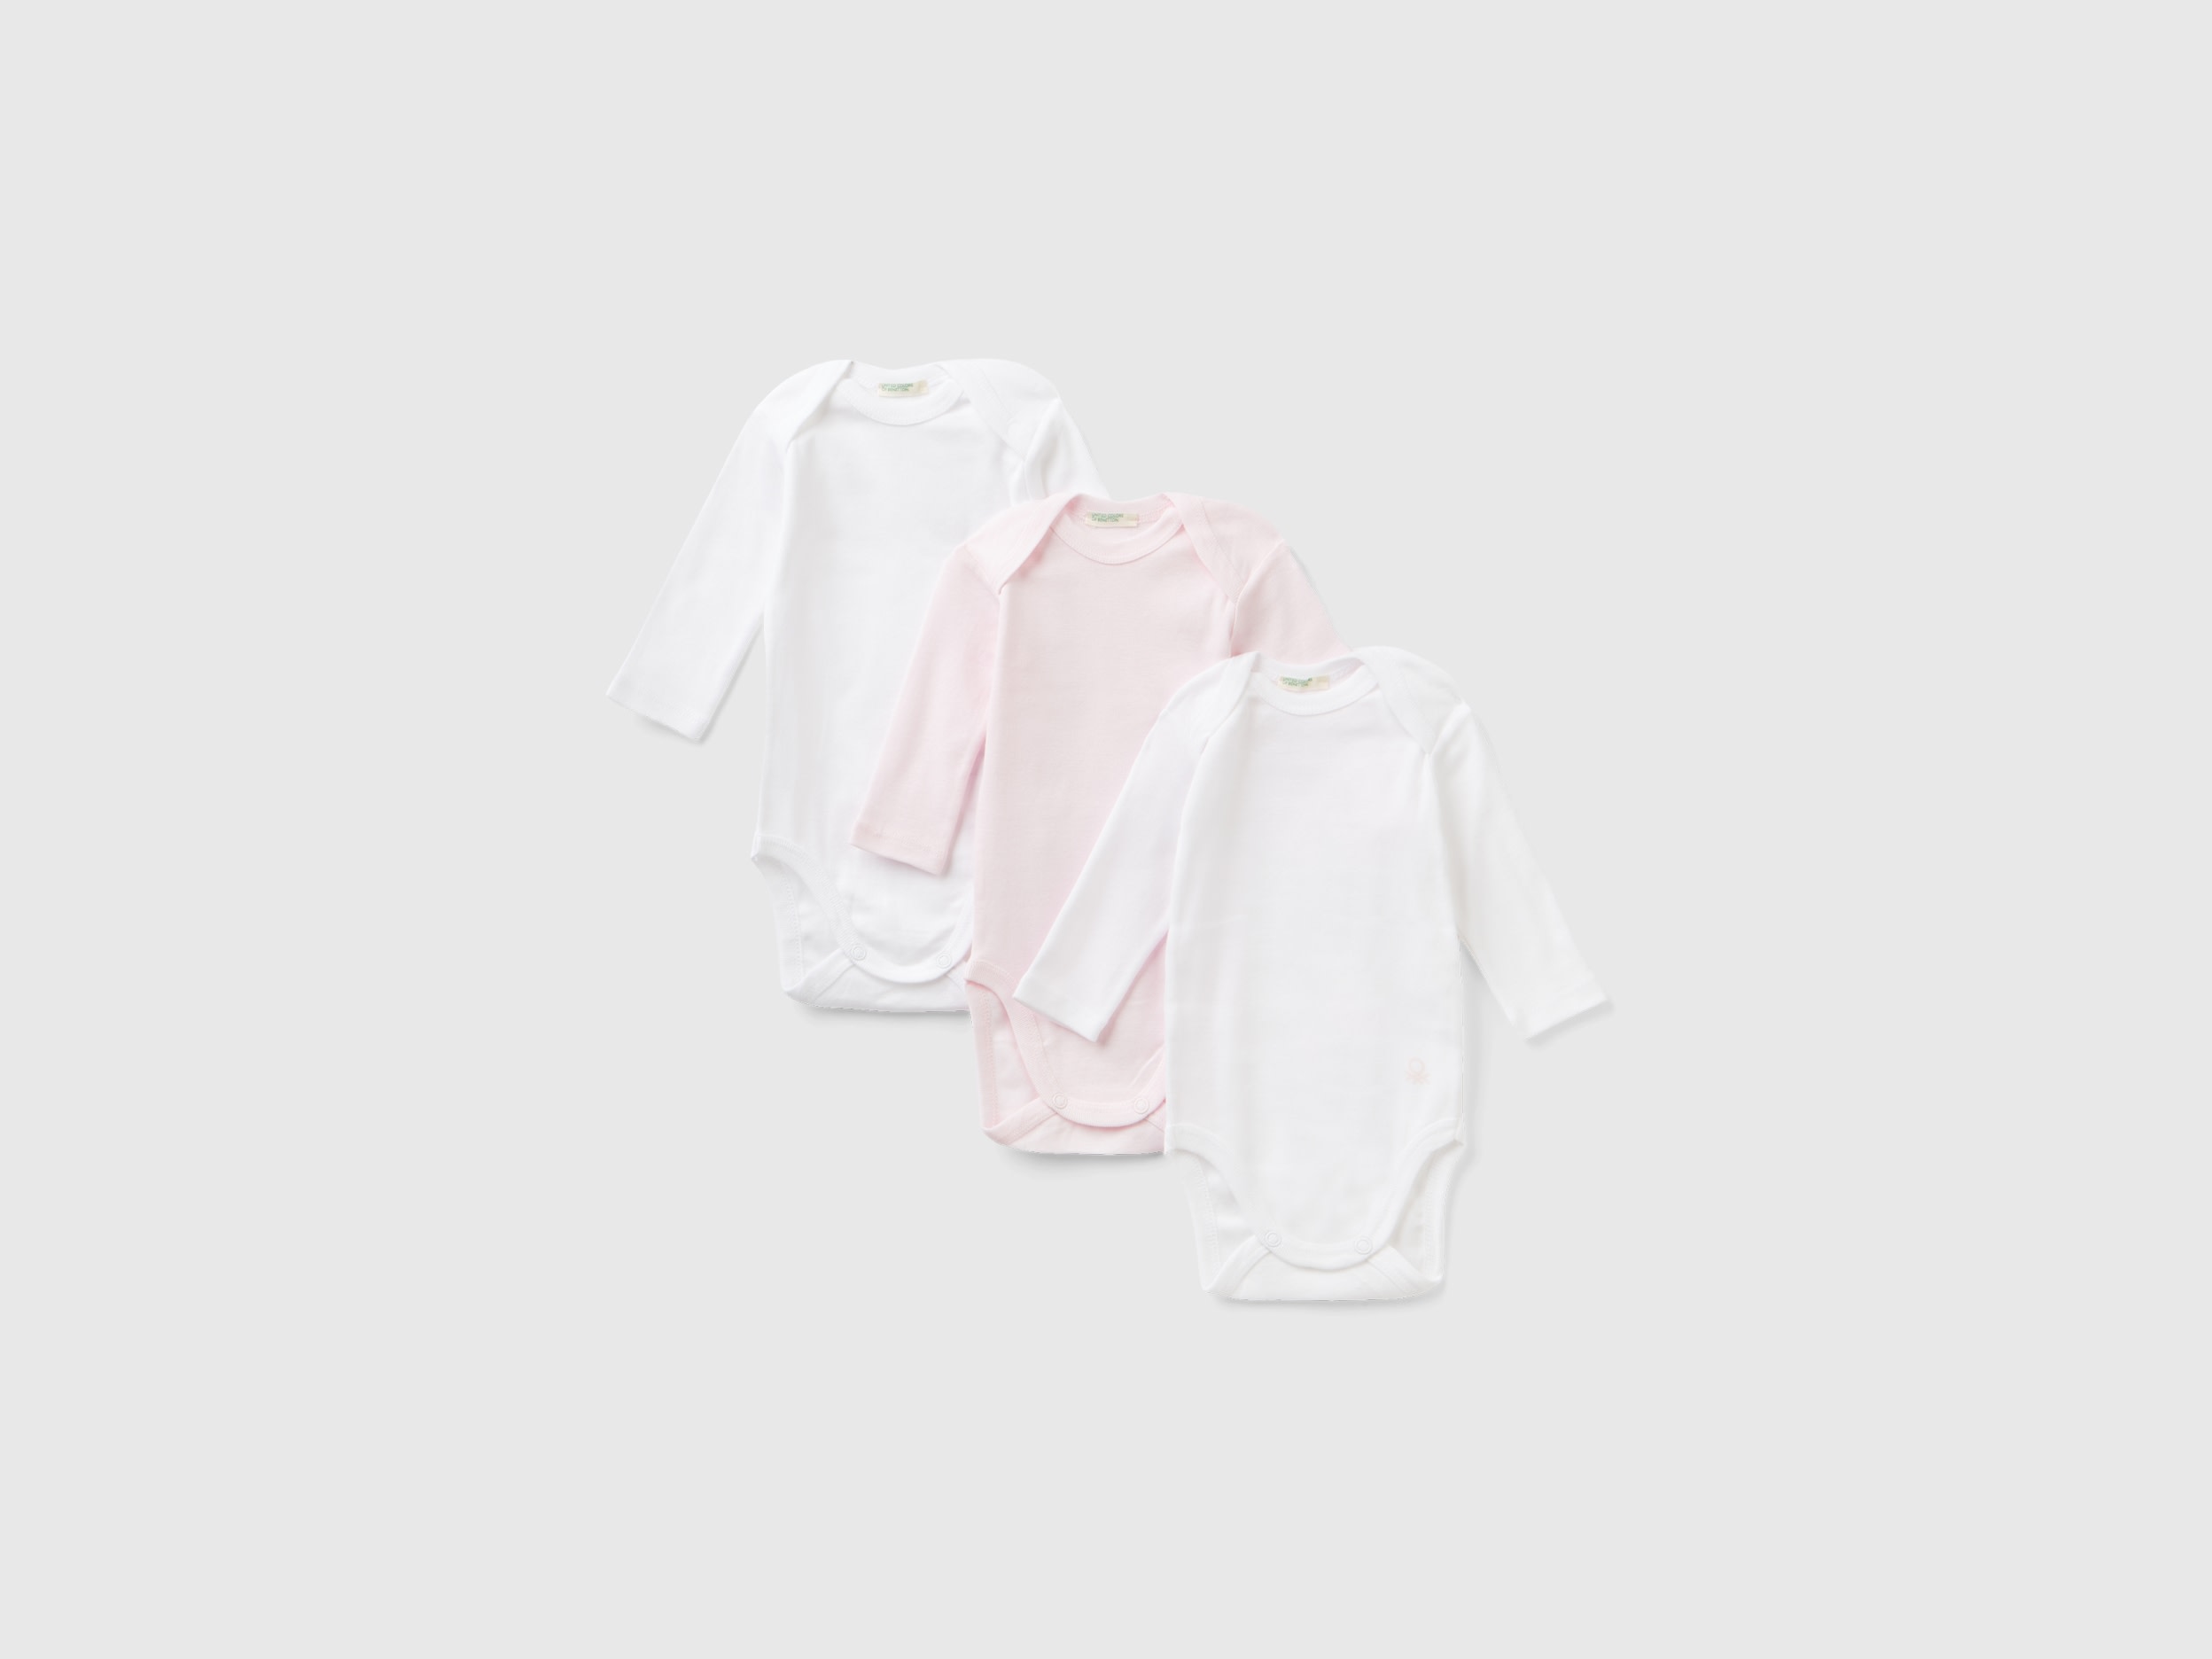 Benetton, Three Solid Color Bodysuits In Organic Cotton, size 18-24, Multi-color, Kids